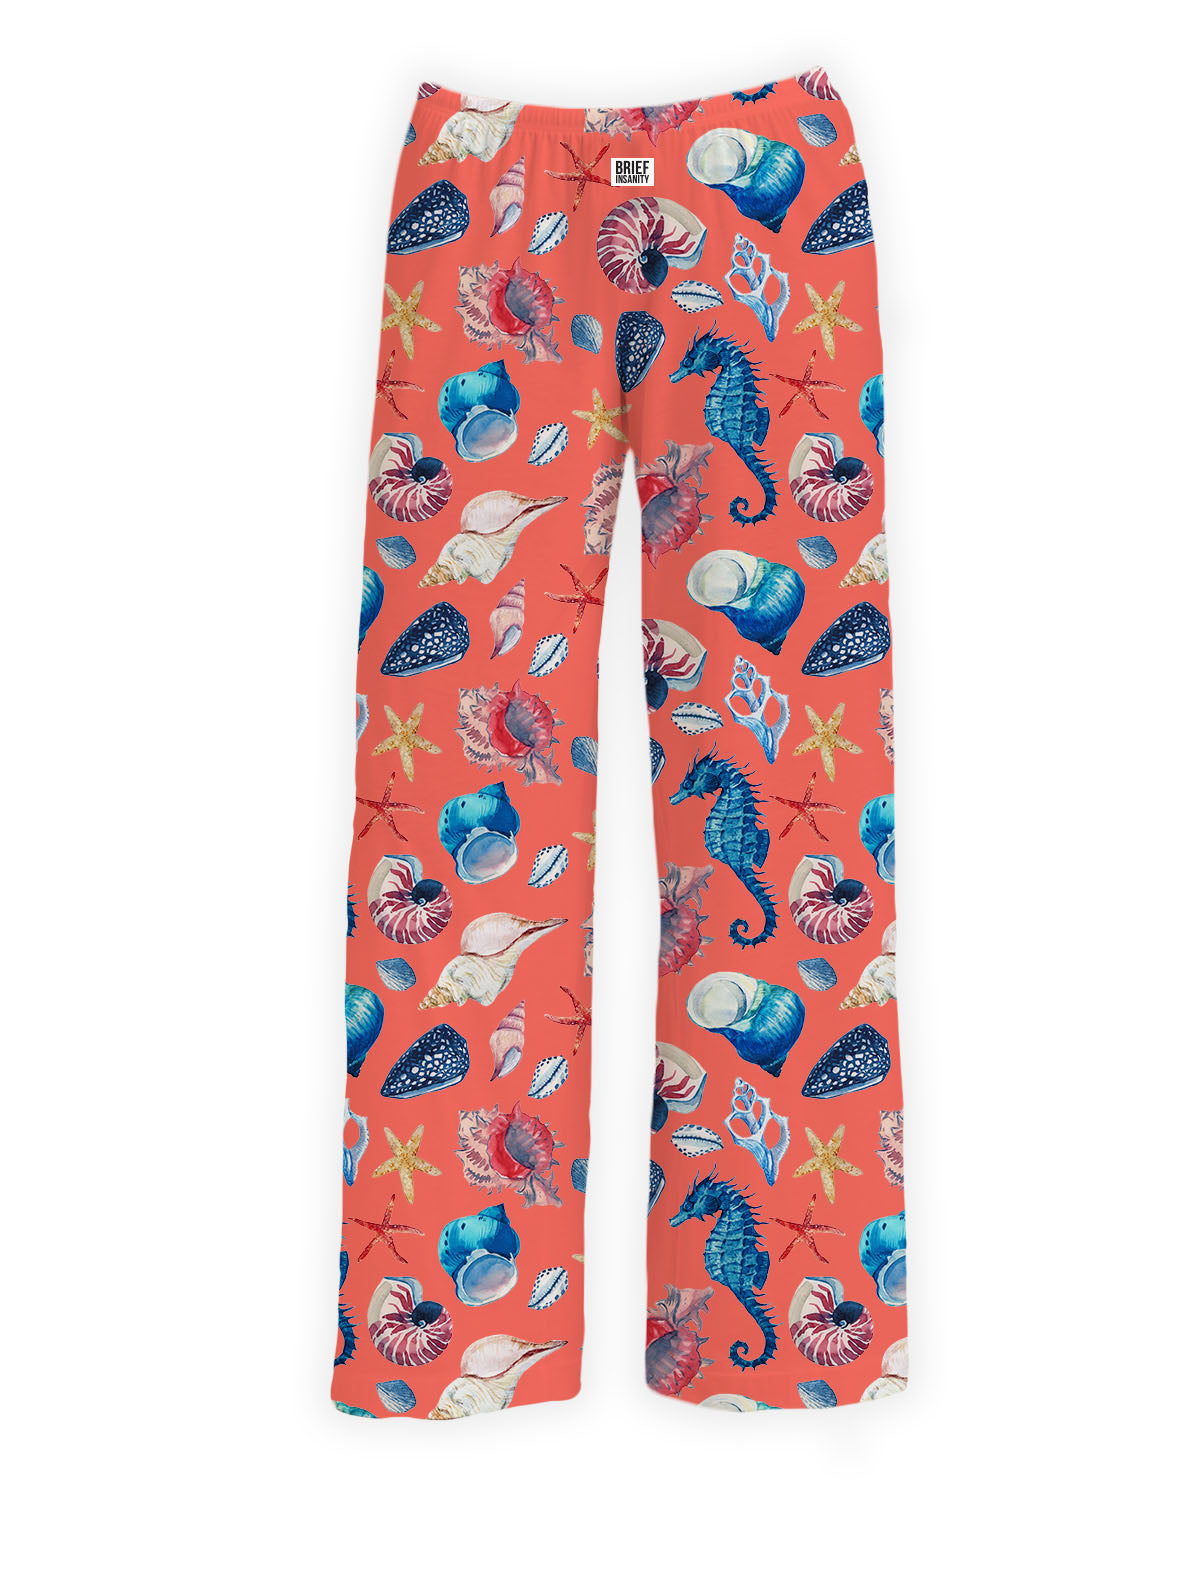 BRIEF INSANITY Seahorse Pattern Pajama Lounge Pants